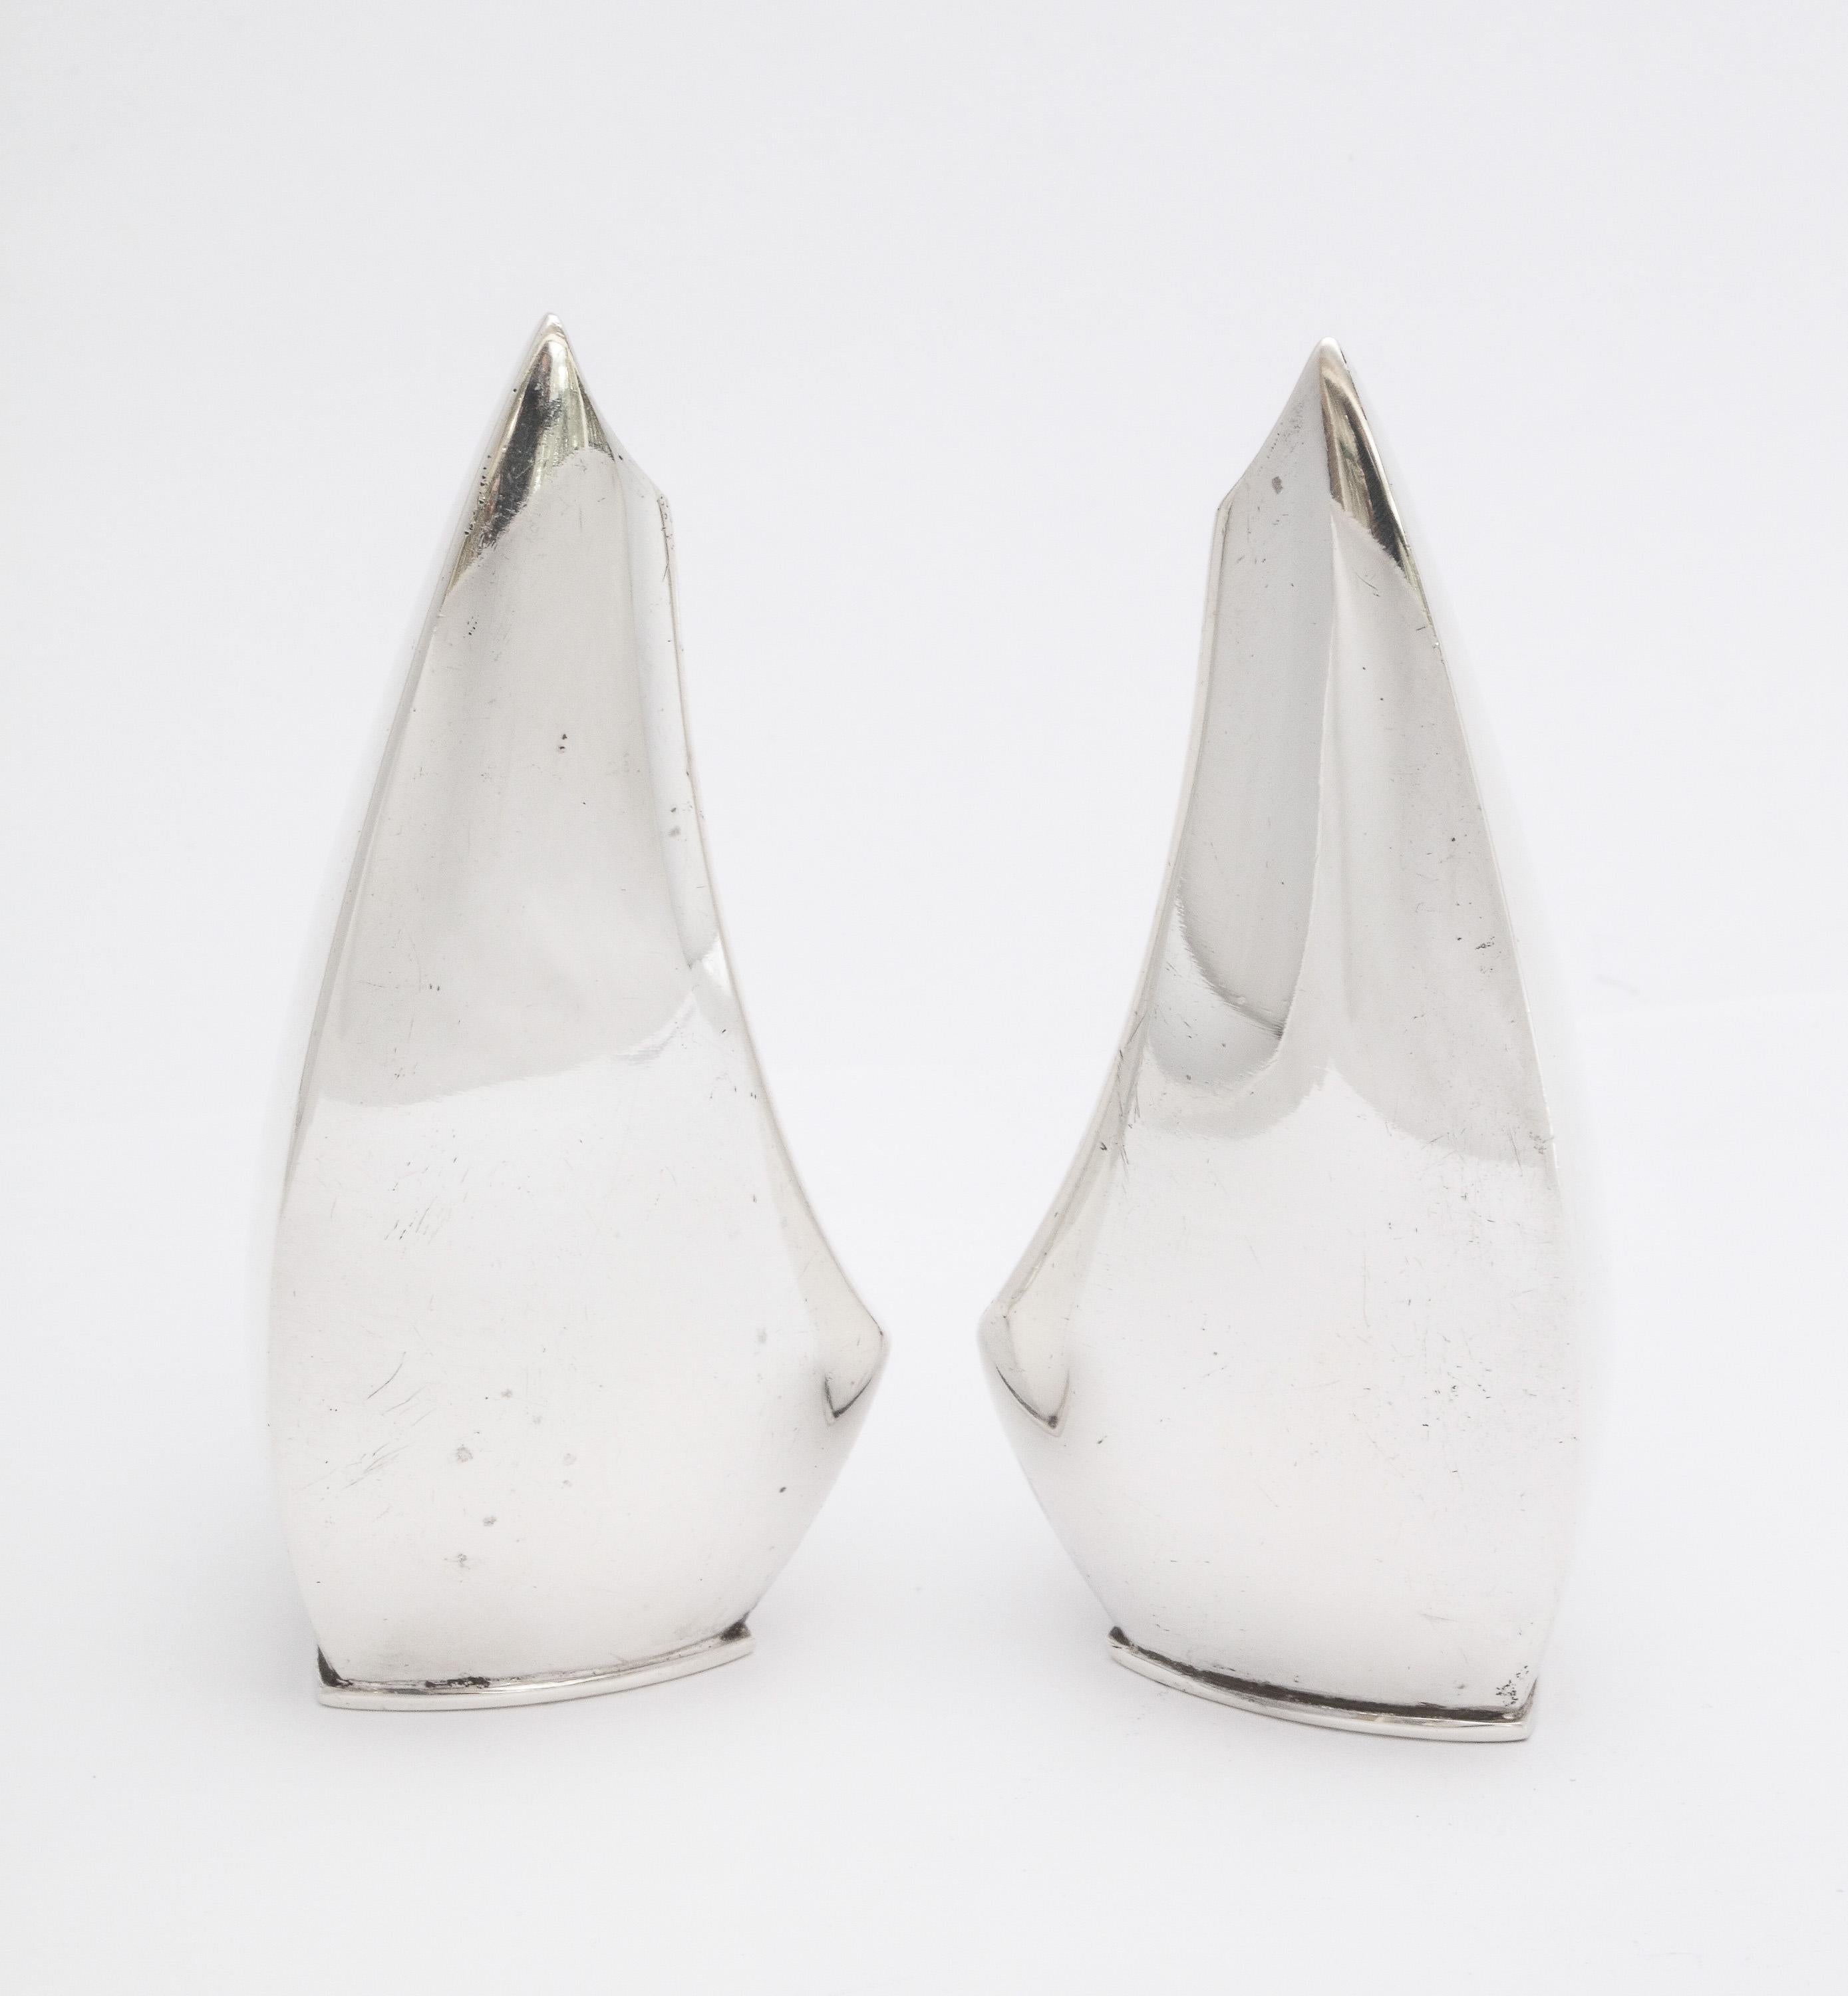 Modernes Paar Salz- und Pfefferstreuer aus Sterlingsilber, Dänemark, um 1950, ABSA - Hersteller. Jeder Shaker ist 3 Zoll hoch x 1 1/2 Zoll breit (an der breitesten Stelle) x 1 1/2 Zoll tief (an der tiefsten Stelle). Anmutiges Design. Dunkle Flecken